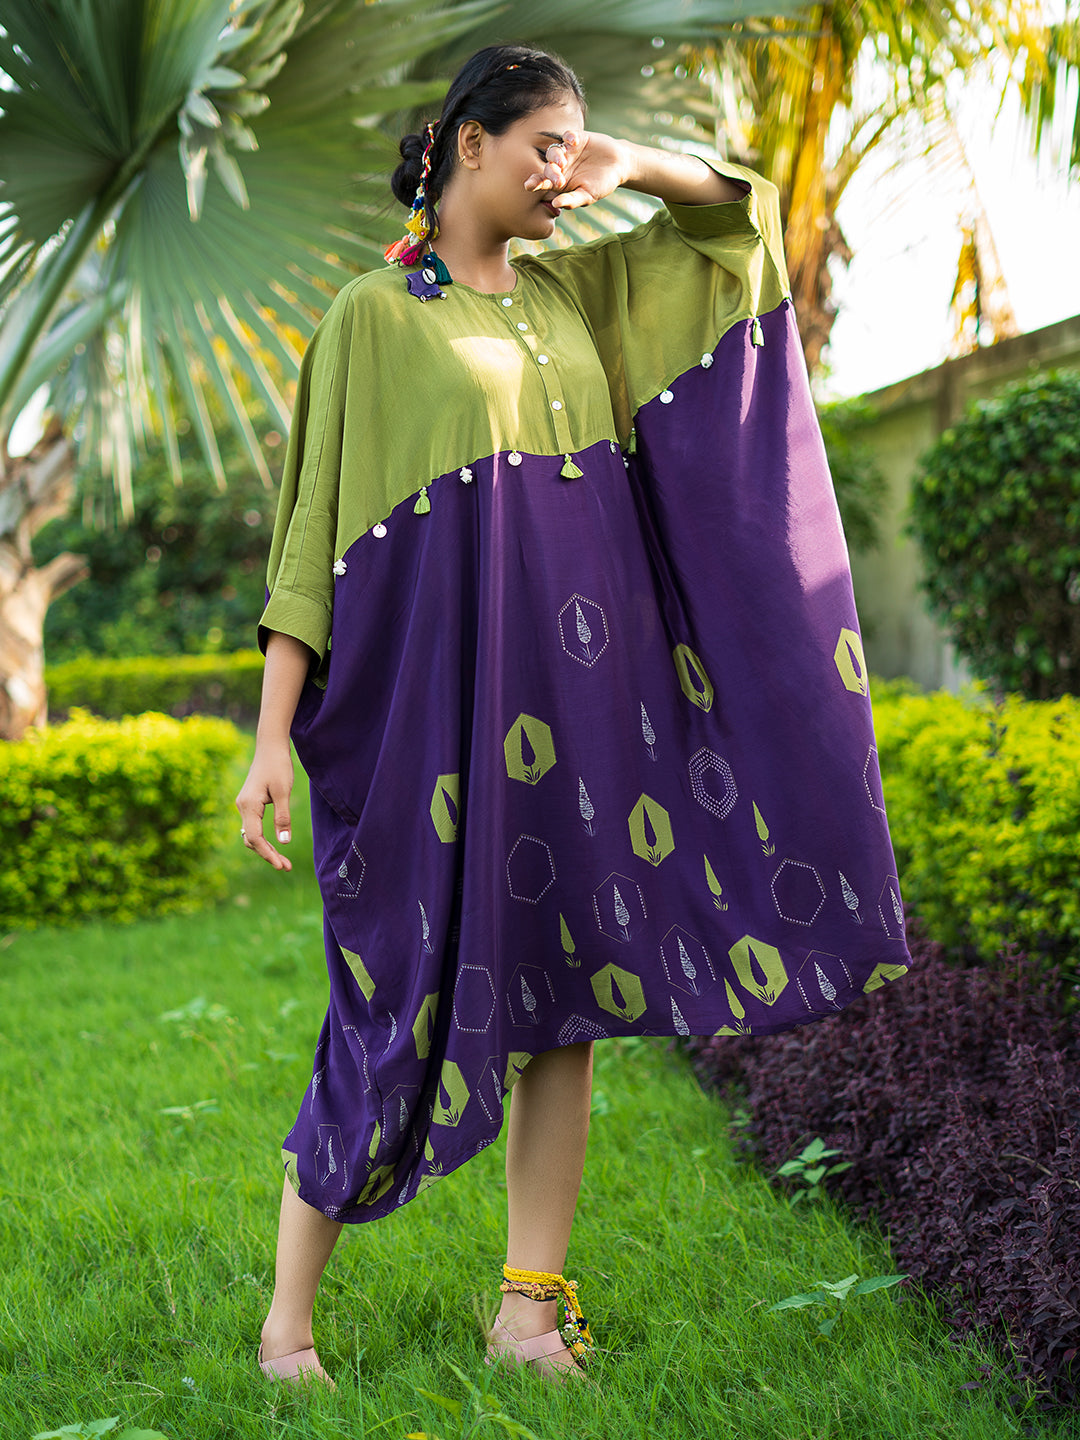 Purple Dresses - Buy Purple Dresses online in India